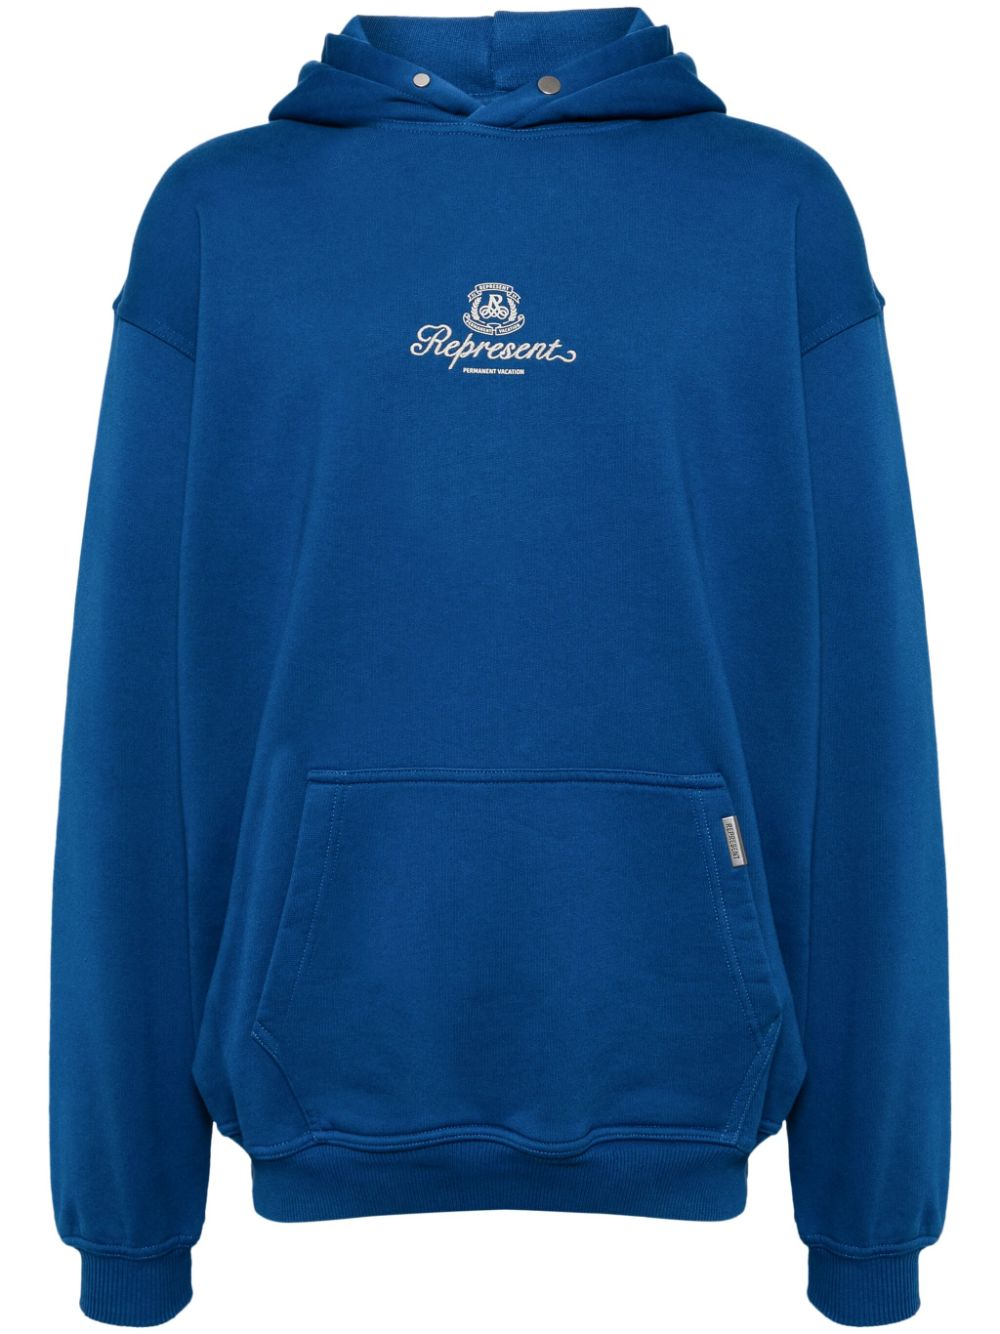 Represent owners club cotton hoodie - Blue von Represent